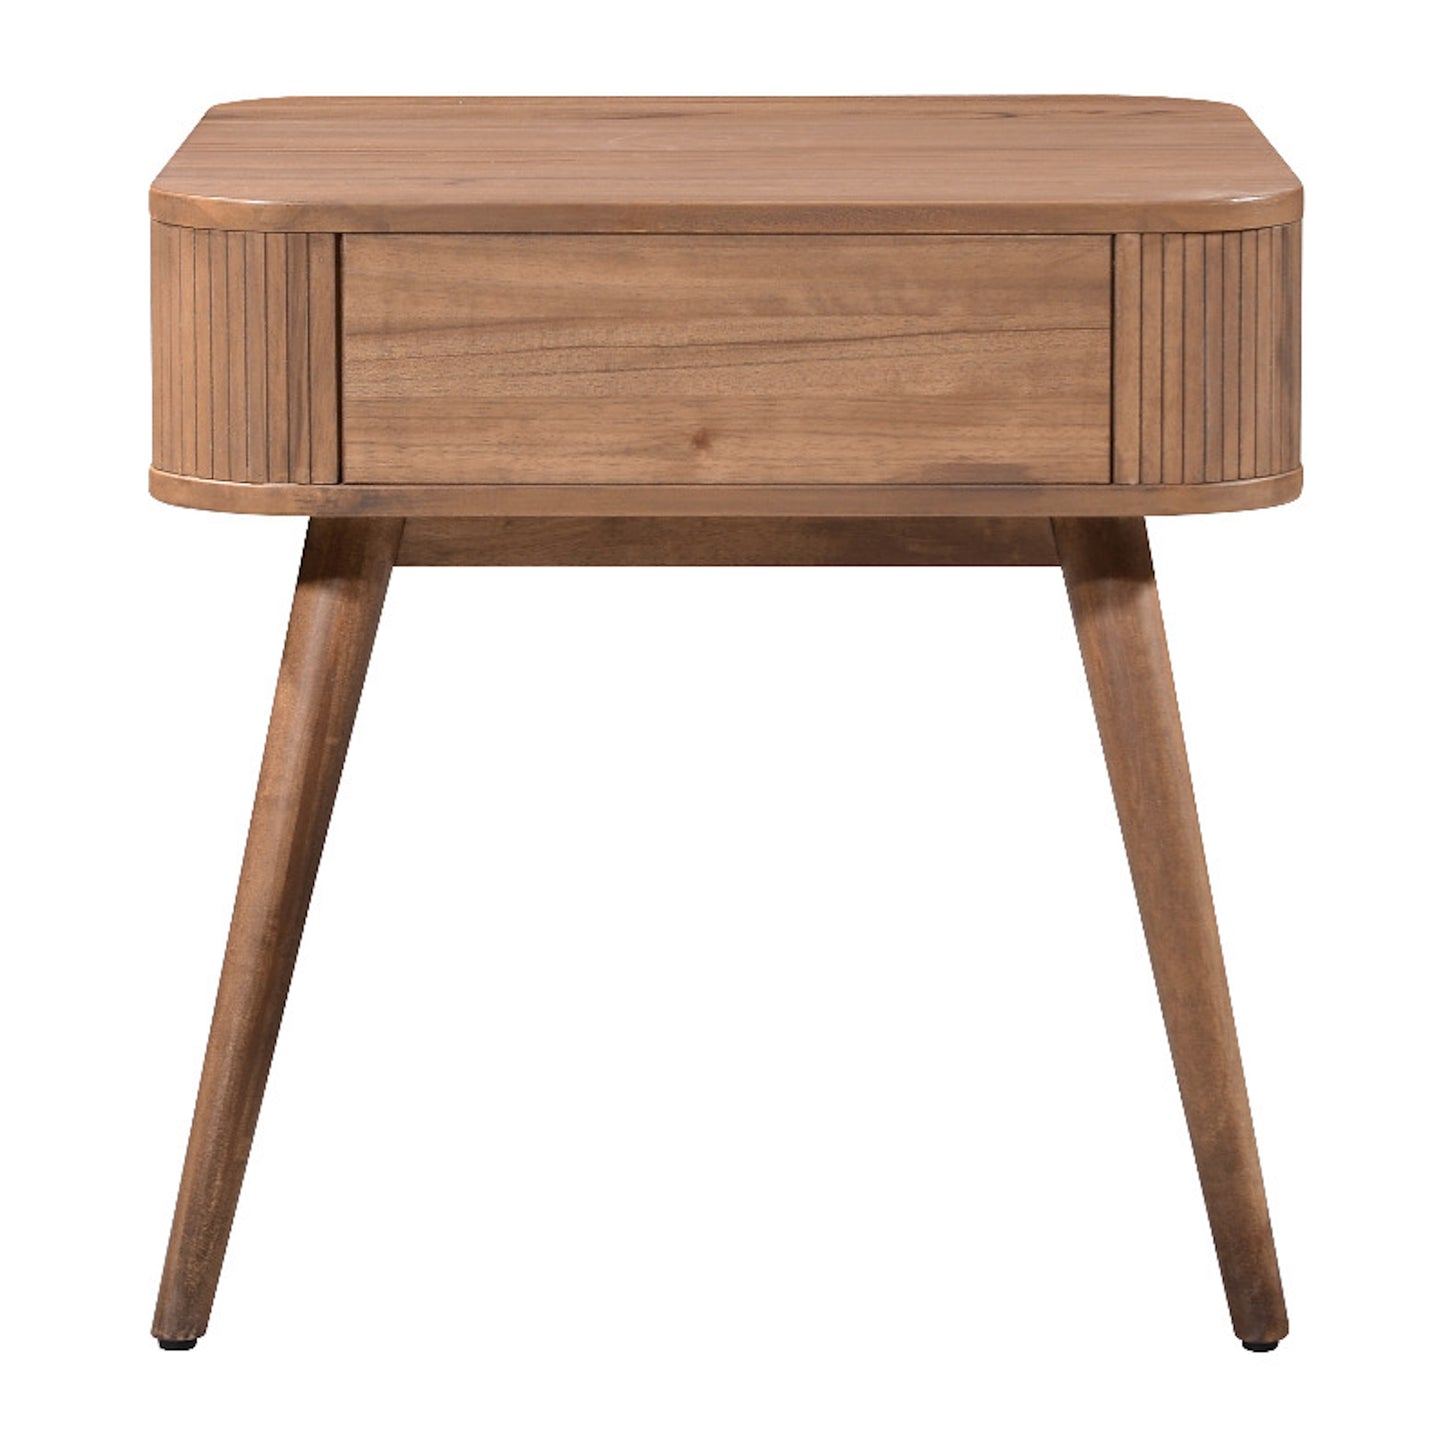 Criterion Denham End Table 550mm Semi-Assembled, Solid Rubber Wood Legs Light Walnut Wood Veneer